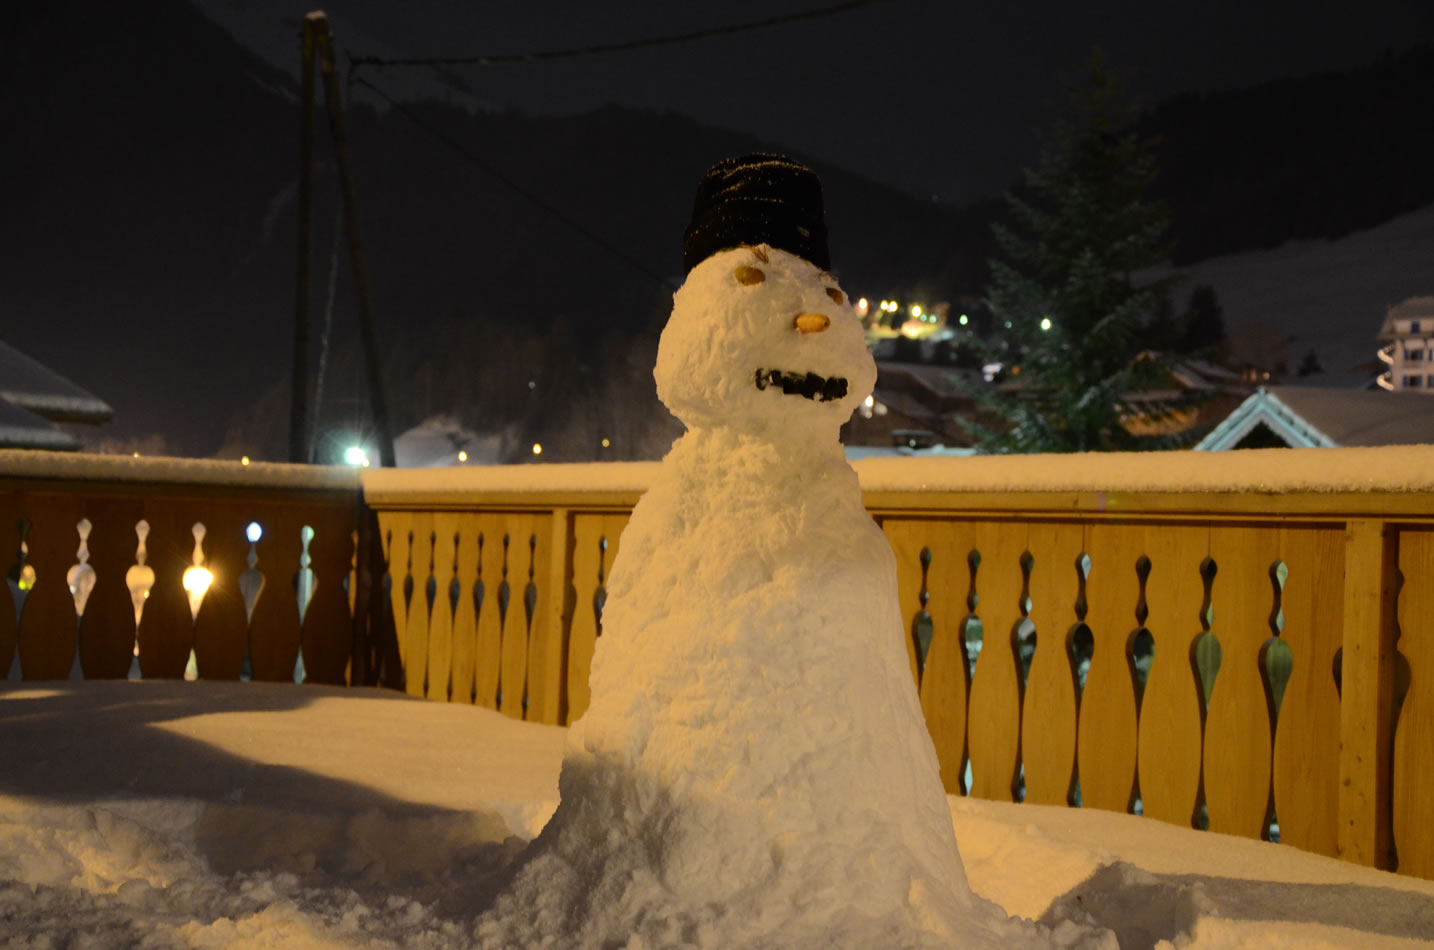 Pierre the snowman